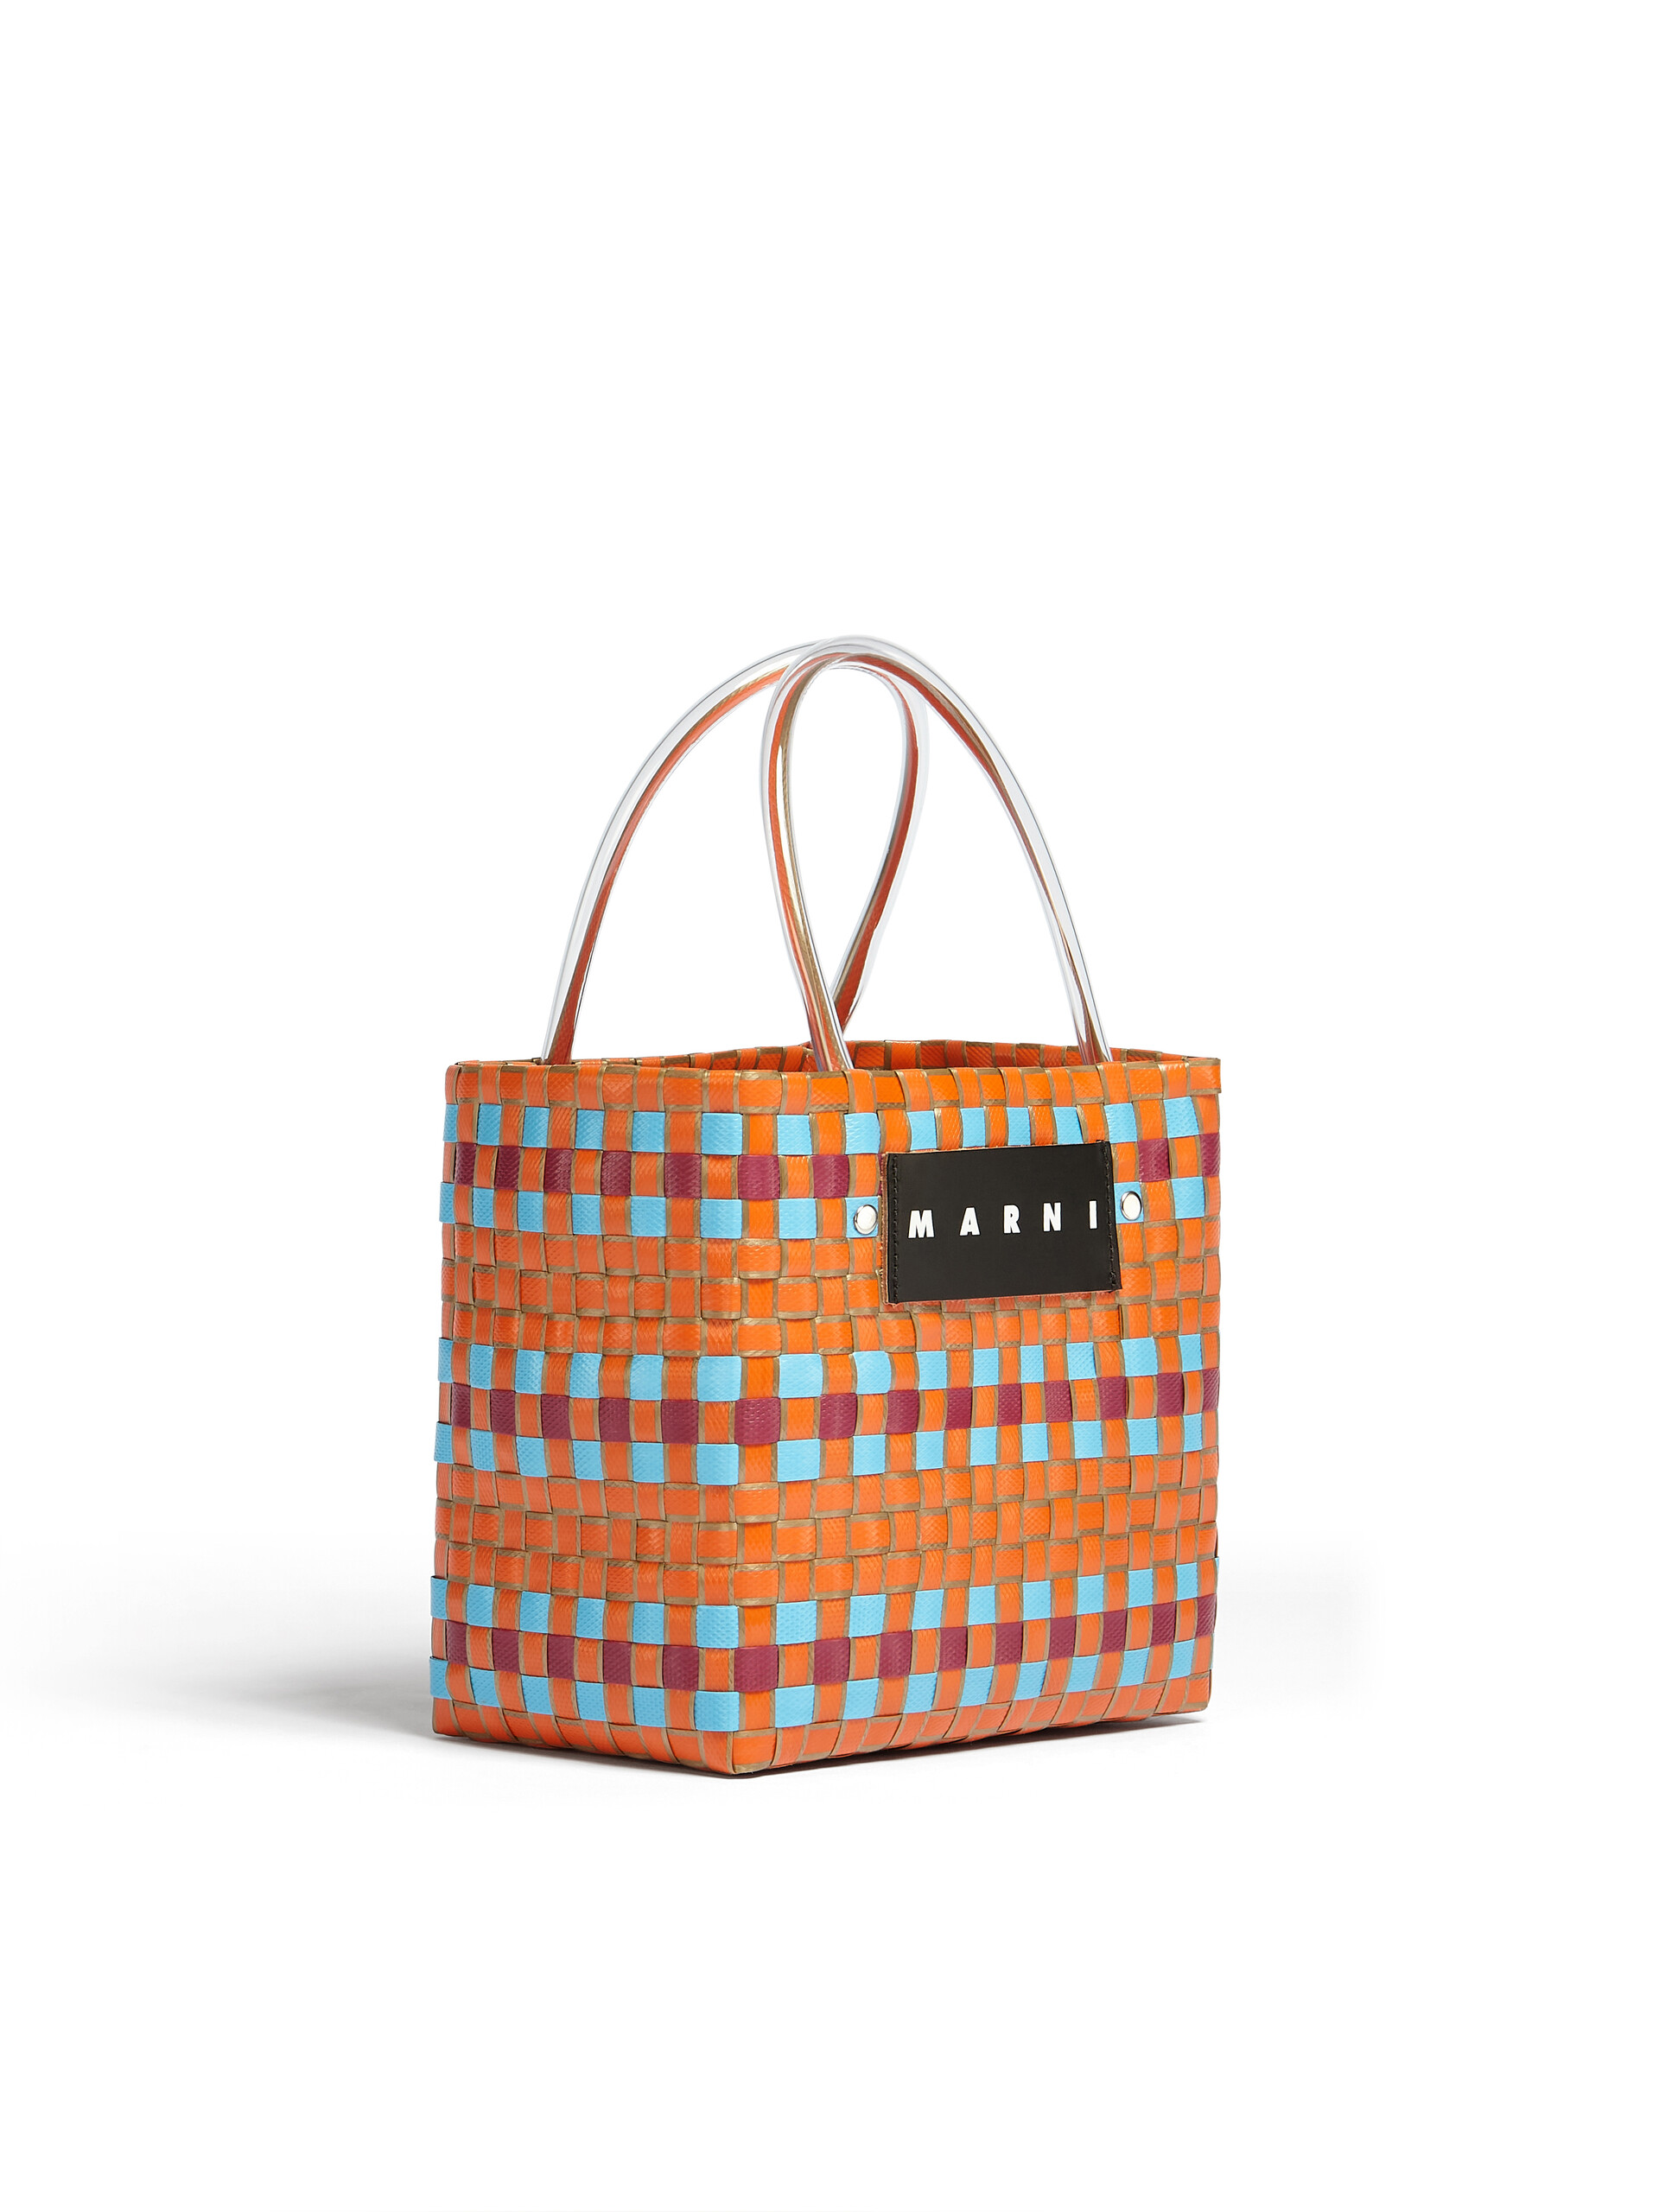 MARNI MARKET BASKET bag in orange woven material - Bags - Image 2